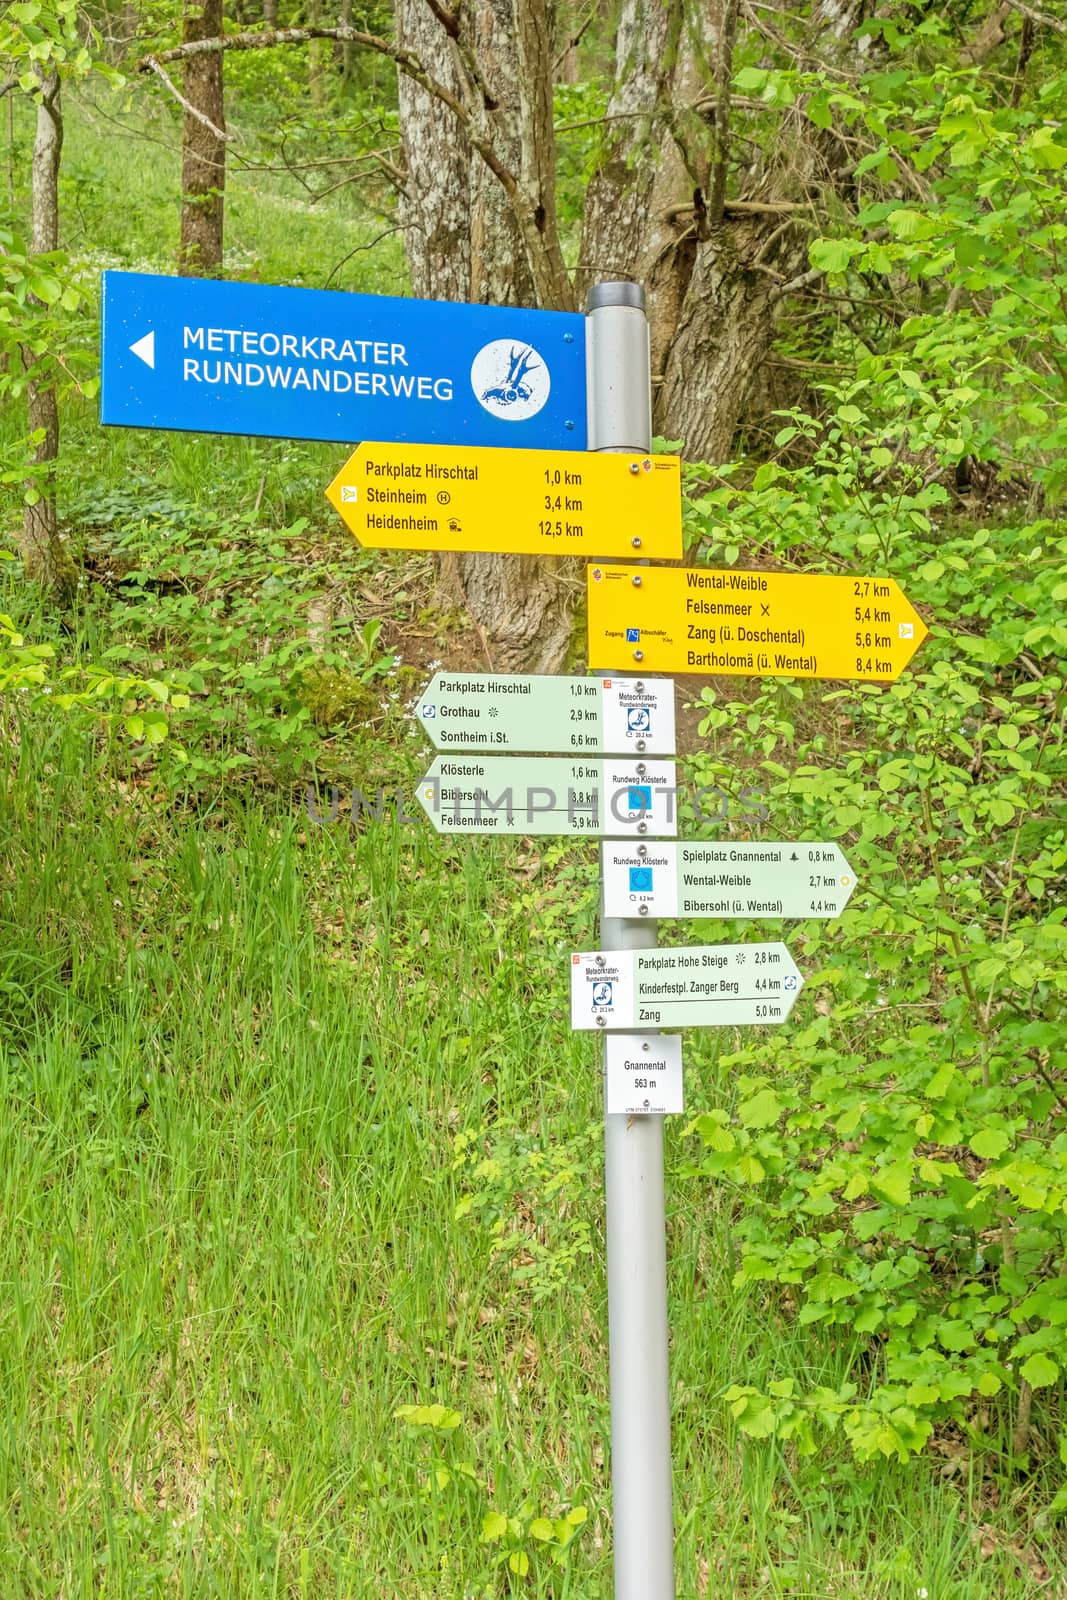 Steinheim, Wental, Germany - May 26, 2016: Wental valley signpost showing path of meteorite crater circular walk (Meteorkrater Rundwanderweg), Swabian Alps (Schwaebische Alp)